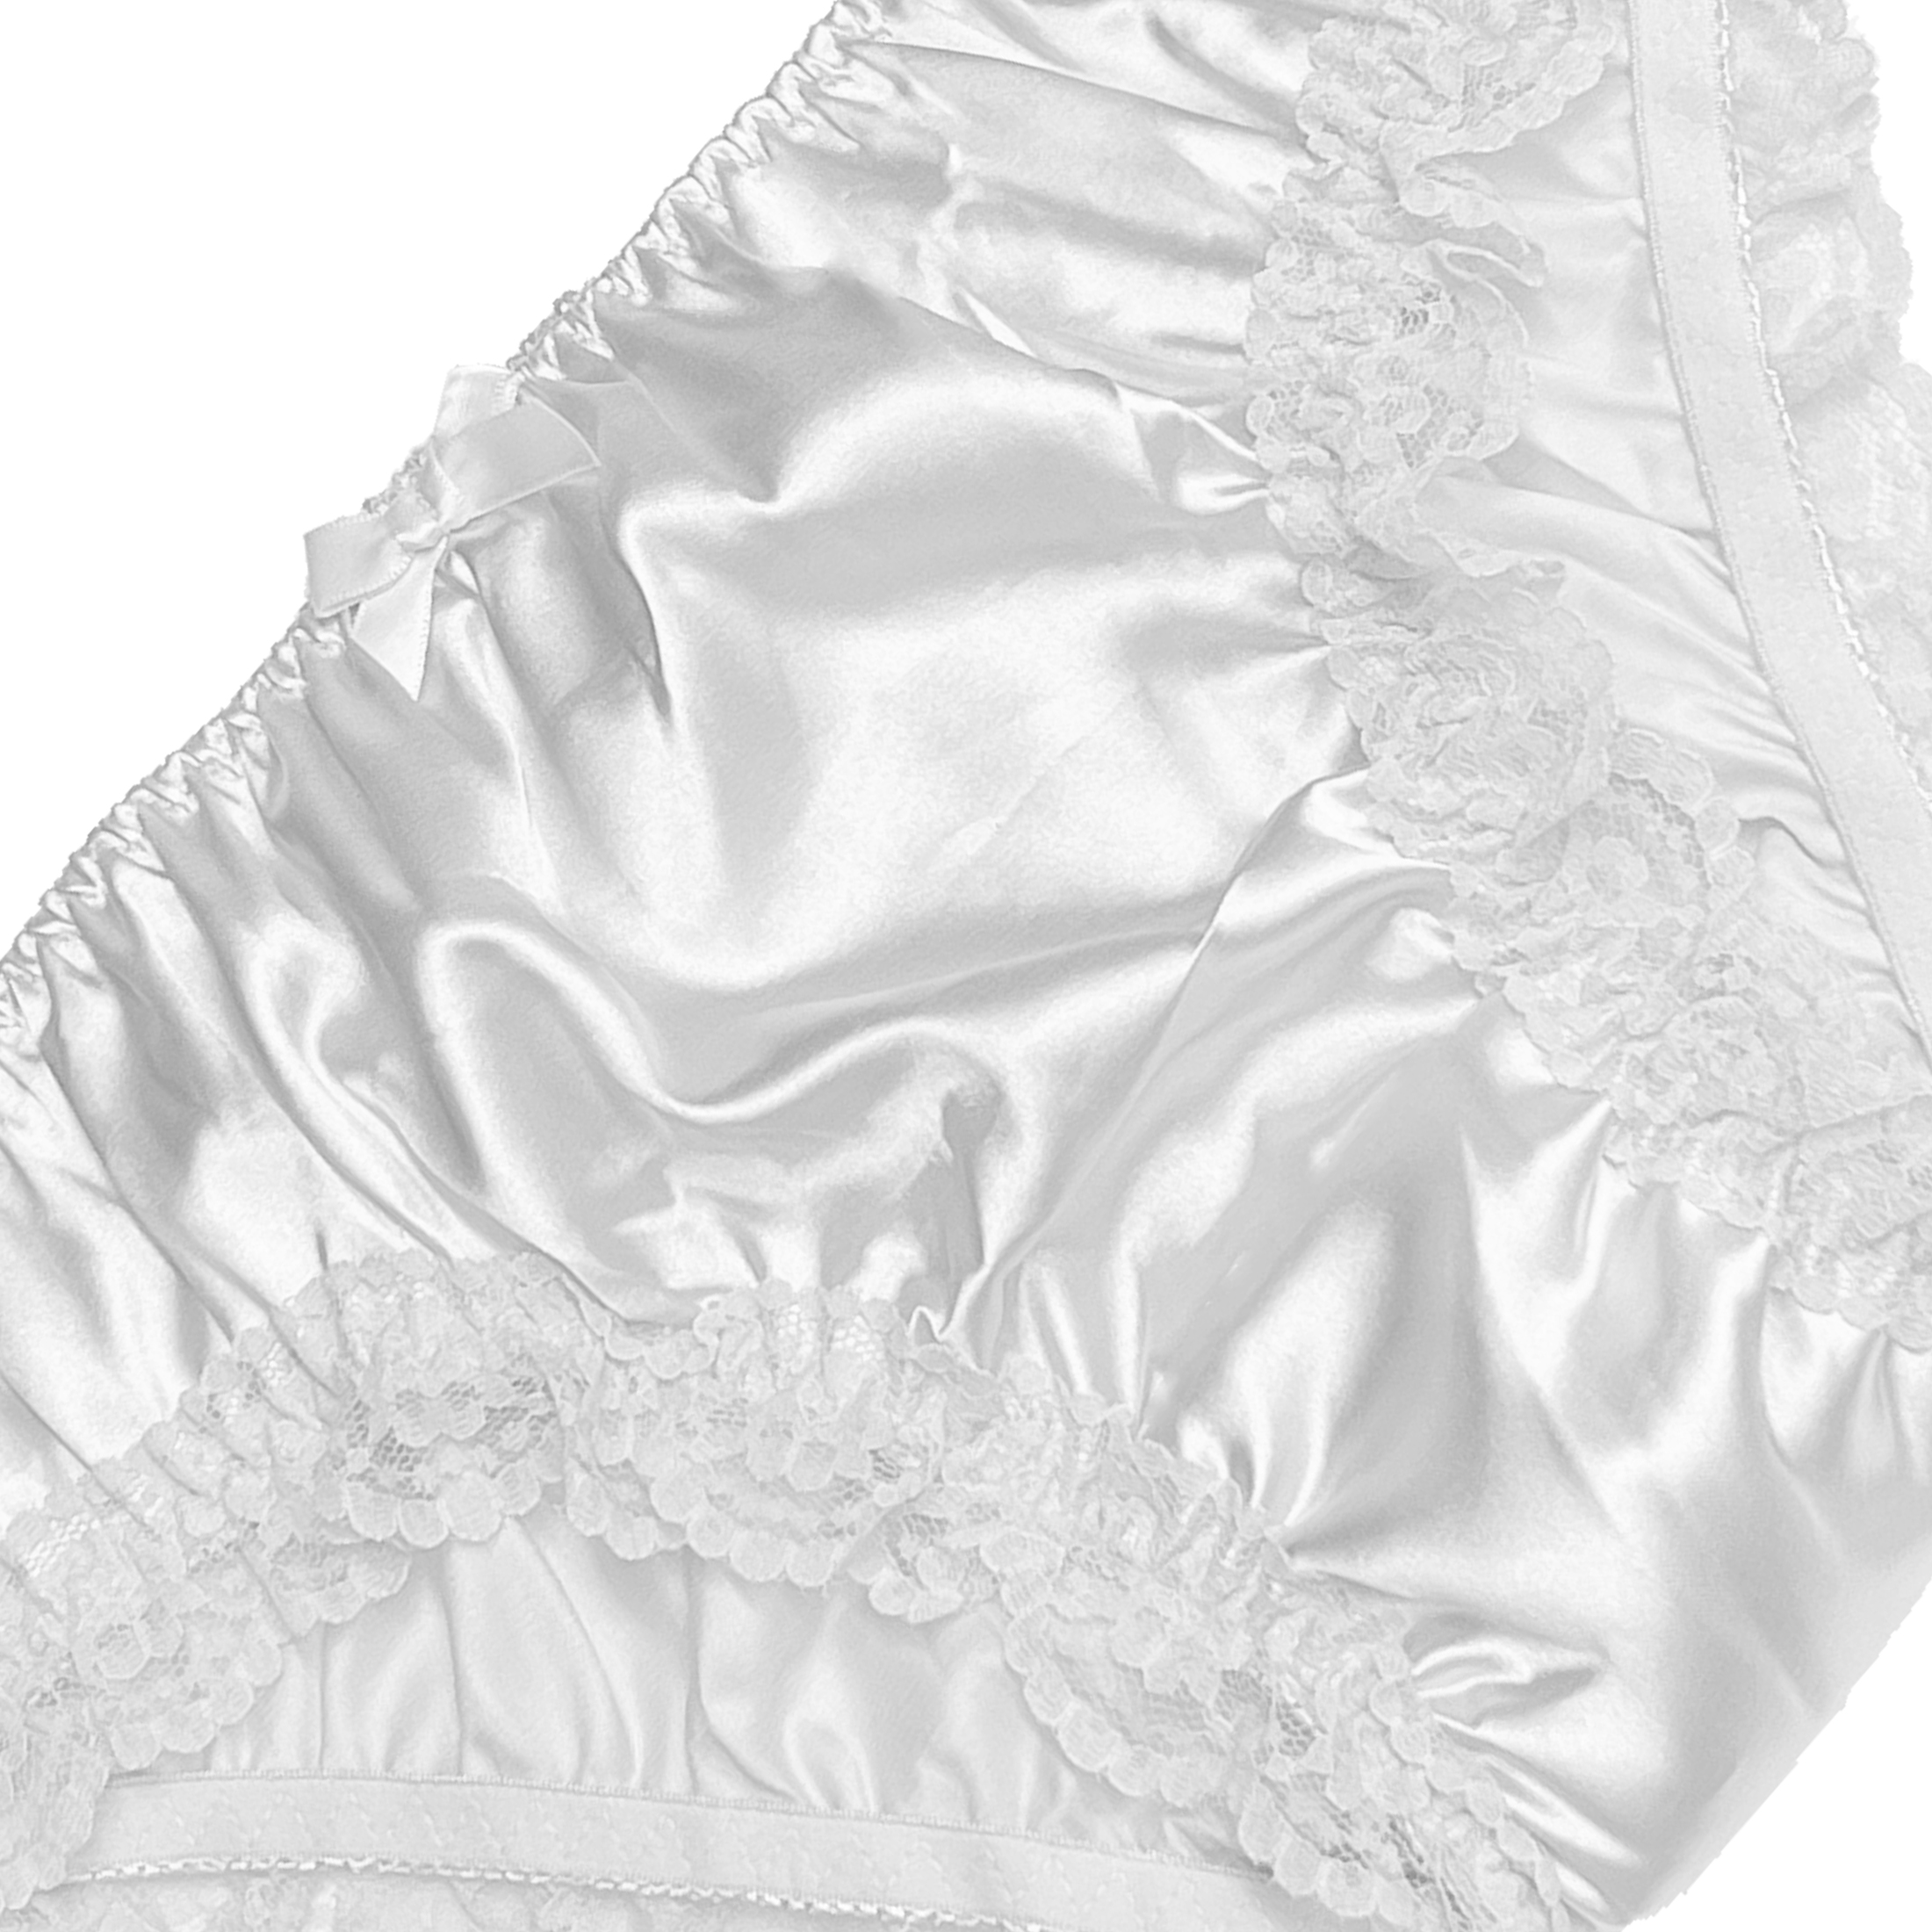 Satin Lace Frilly Sissy Cdtv Full Panties Knicker Briefs Underwear Size S Xxl Ebay 5832